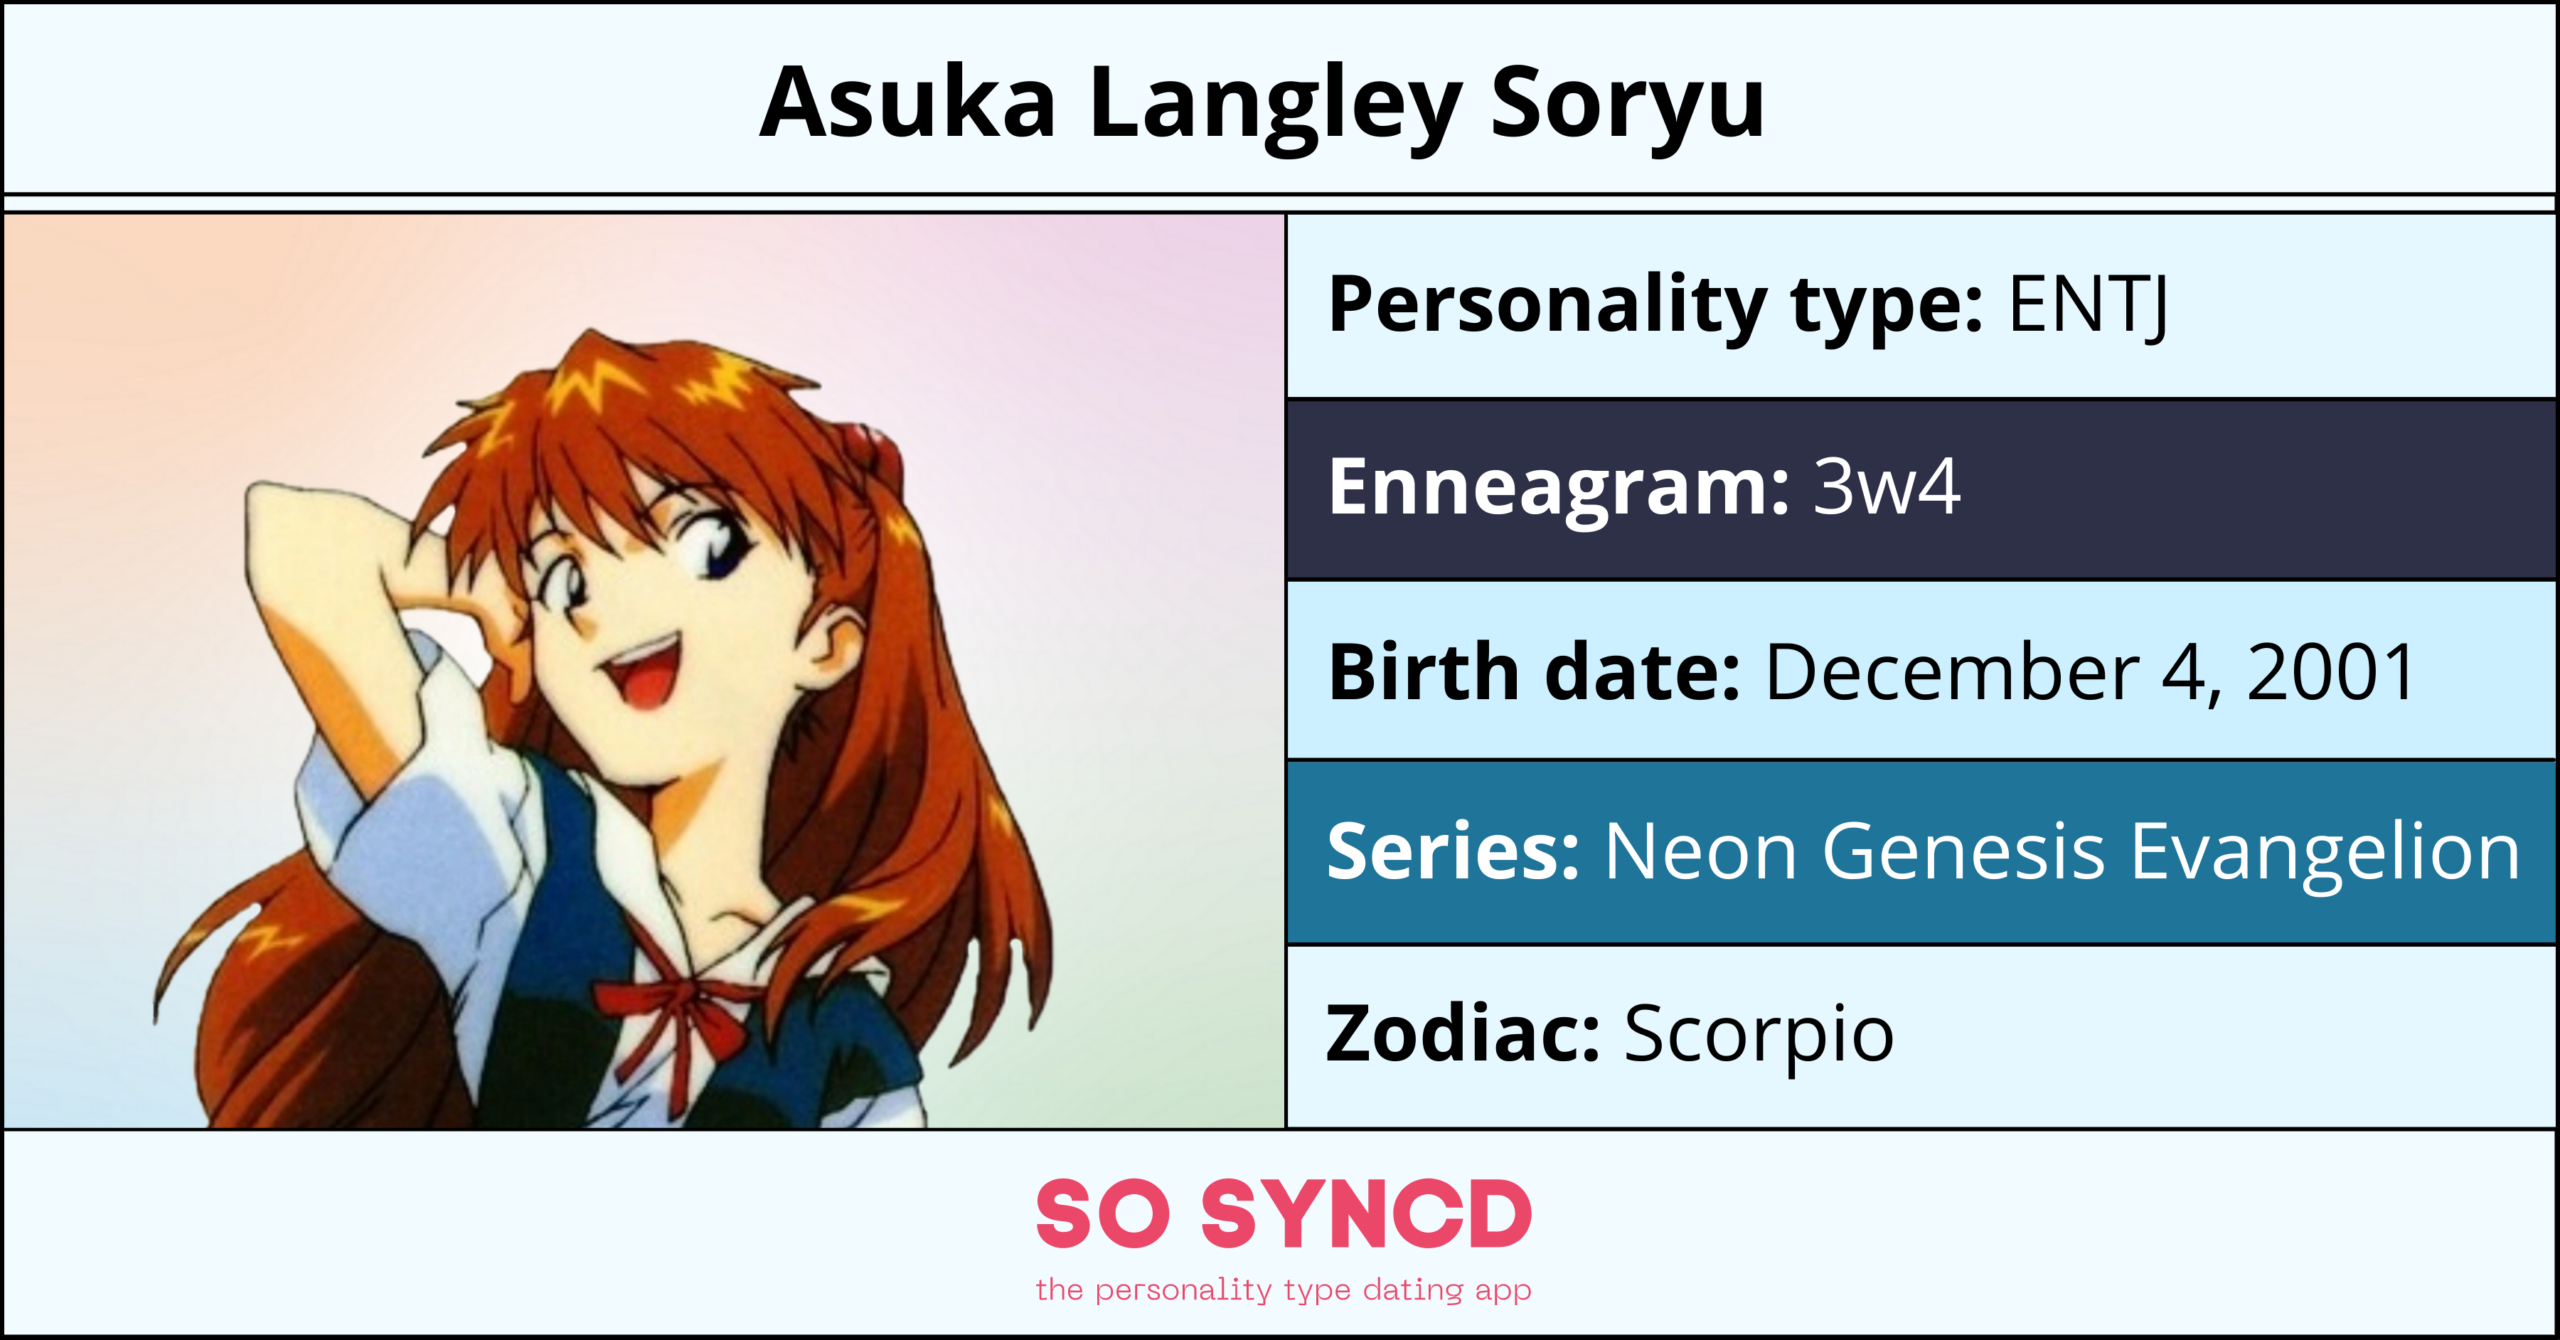 Asuna Yuuki Personality Type, Zodiac Sign & Enneagram